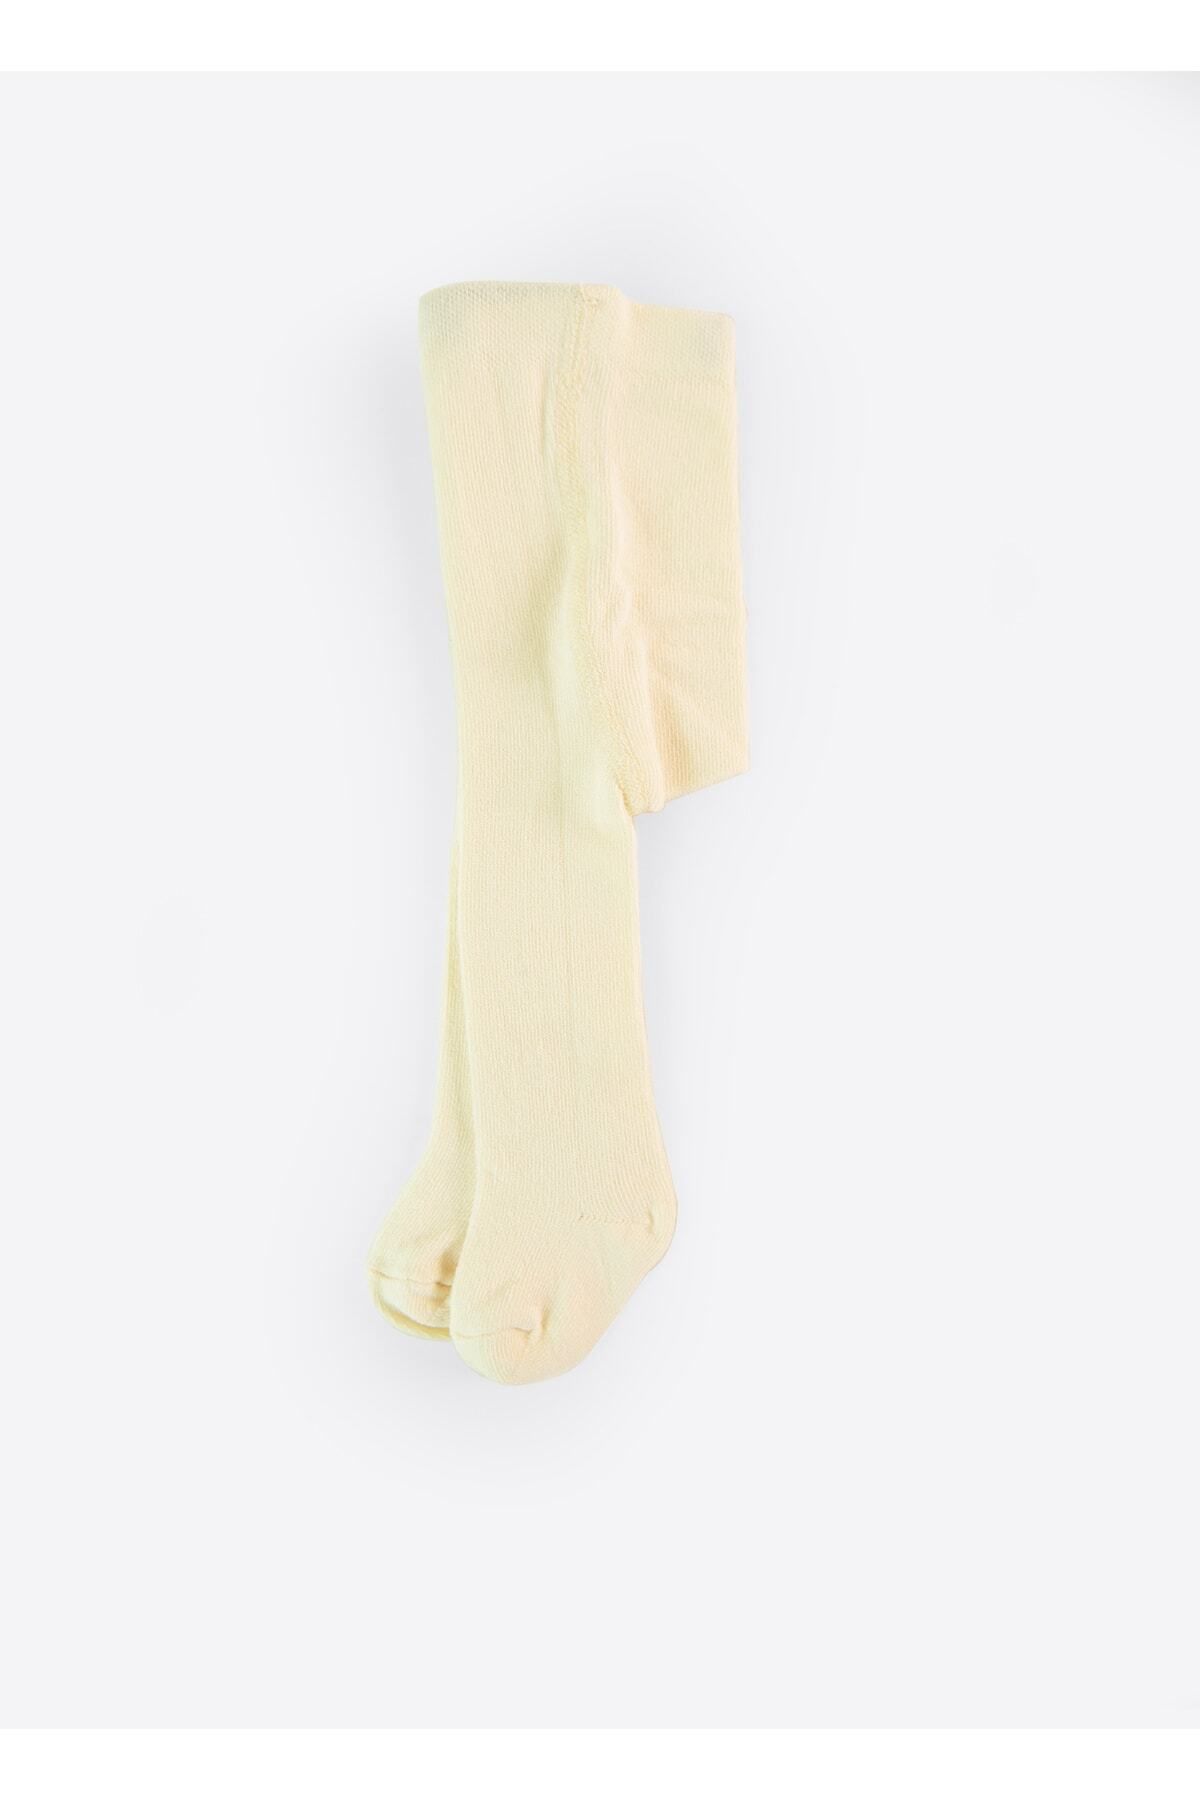 kitikate Organik Basic Külotlu Çorap-natural